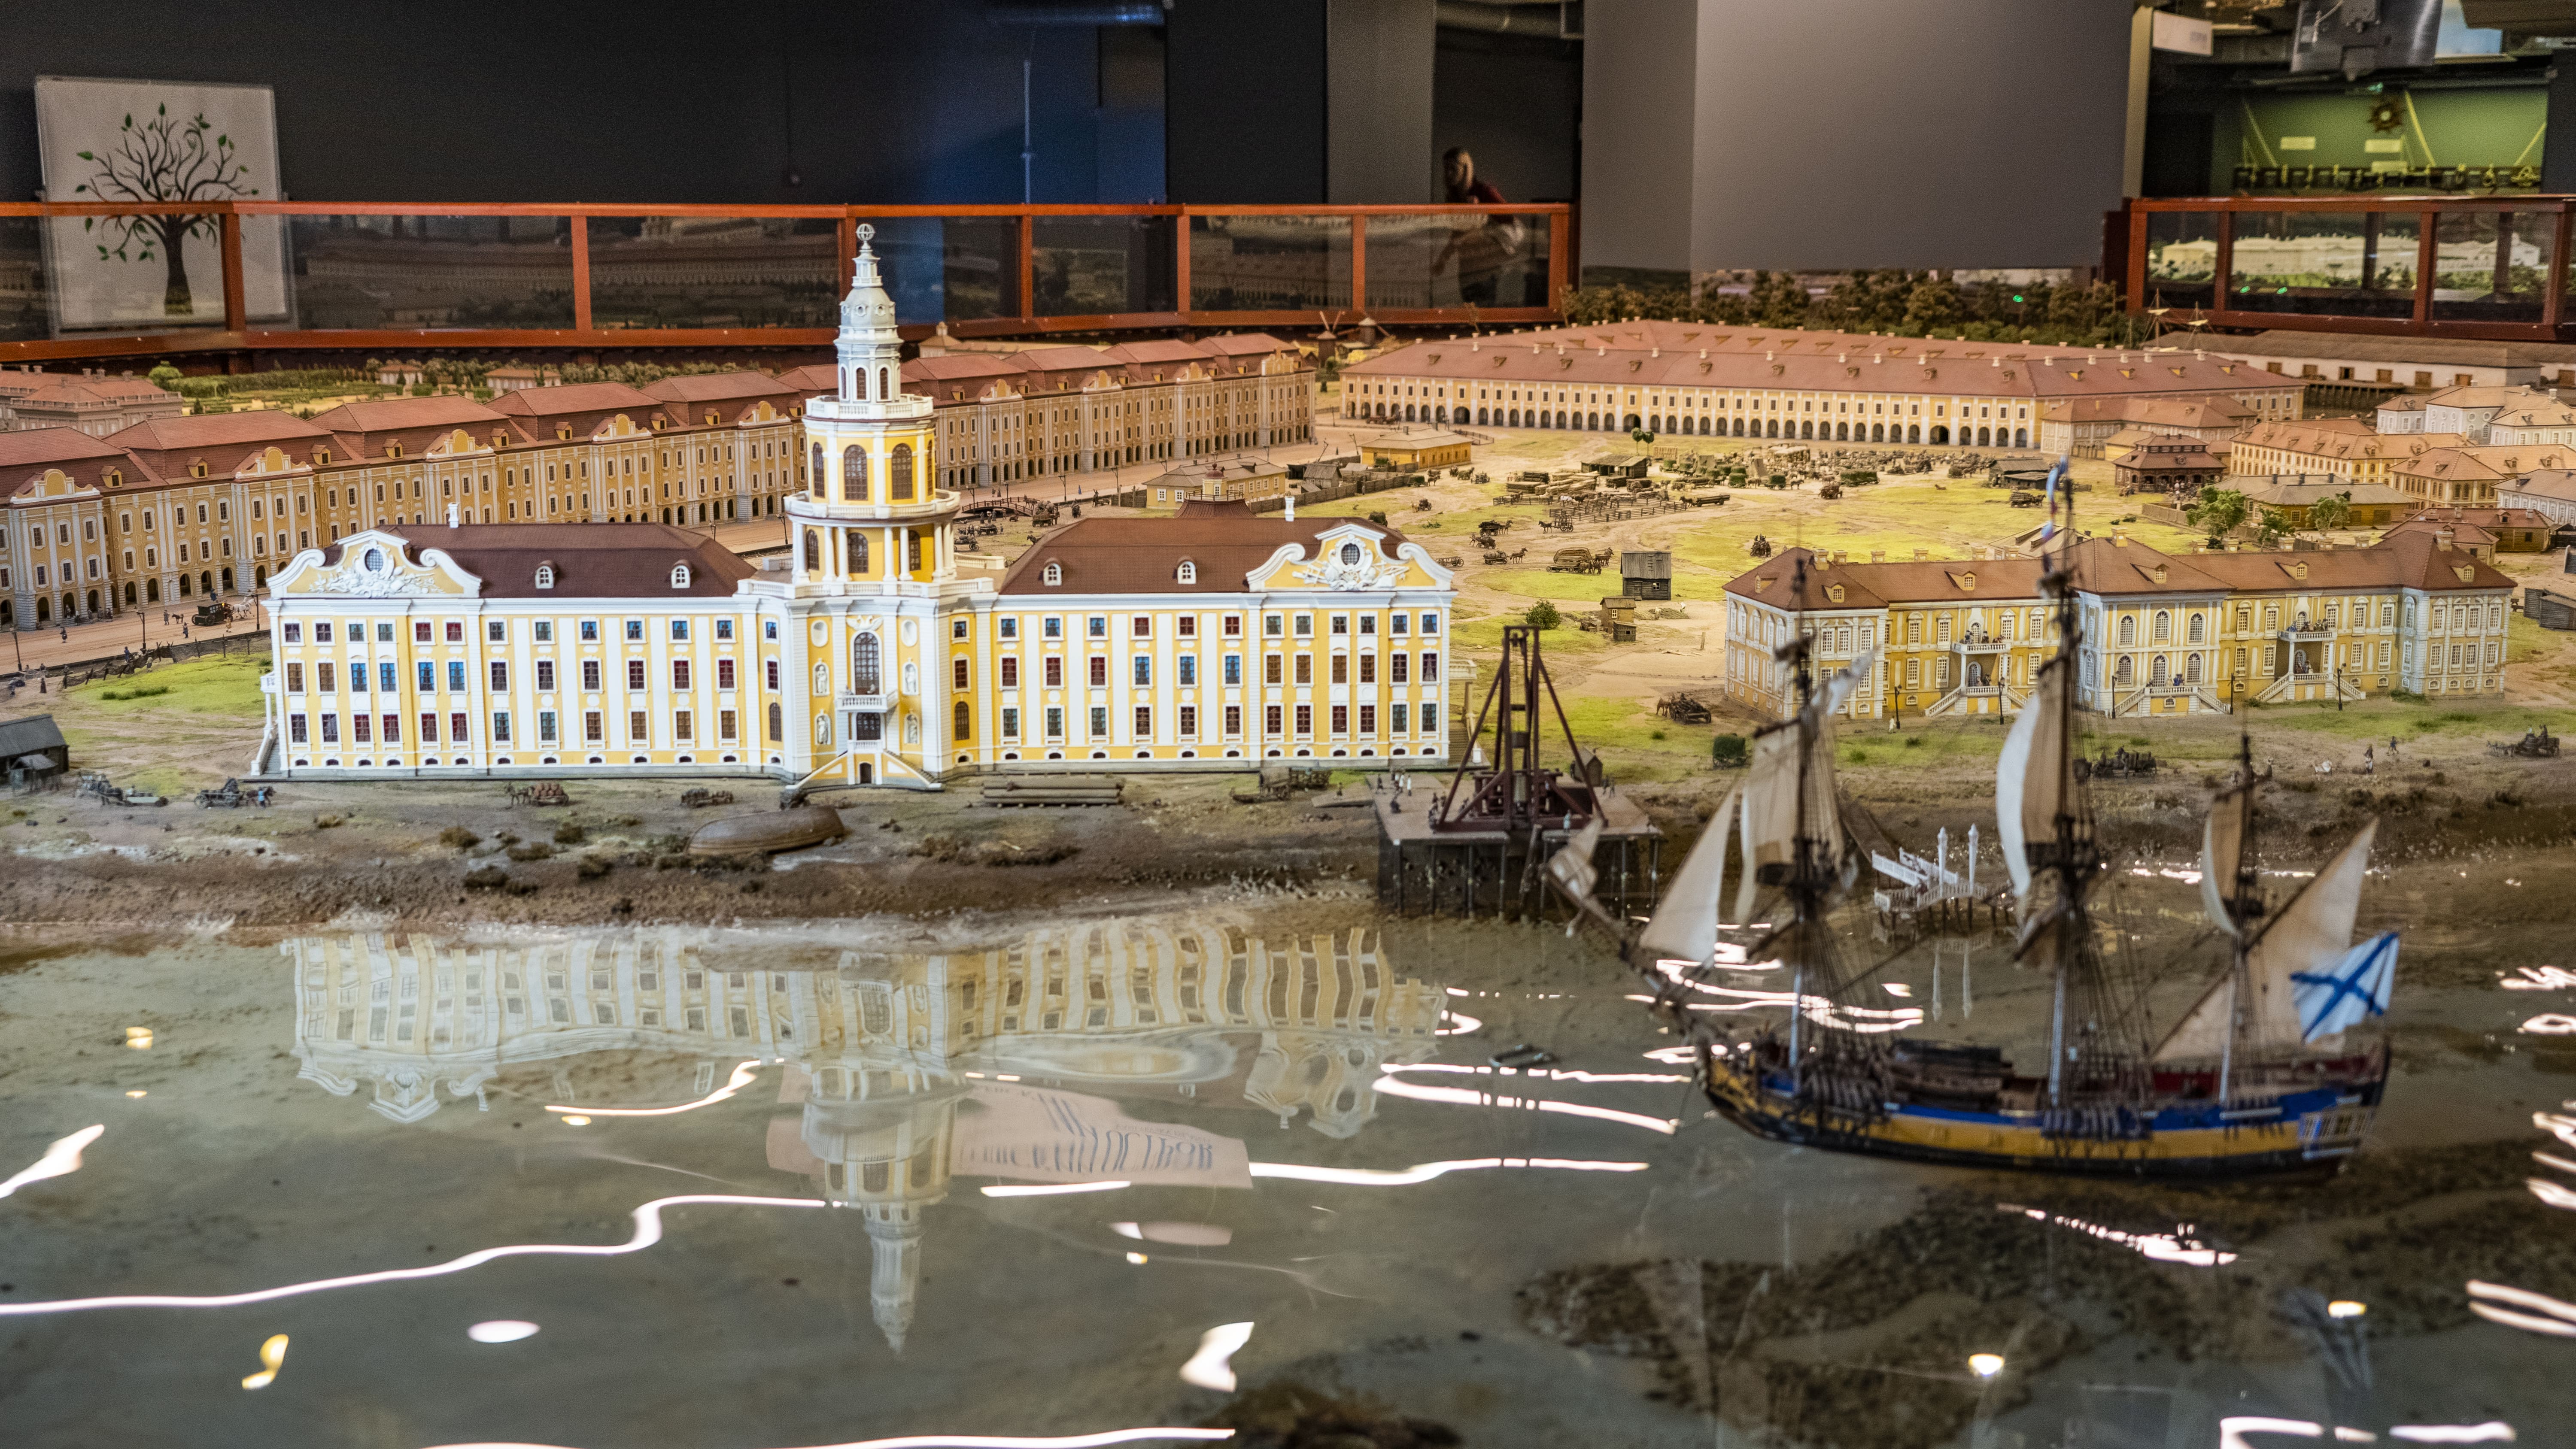 музей макет санкт петербурга